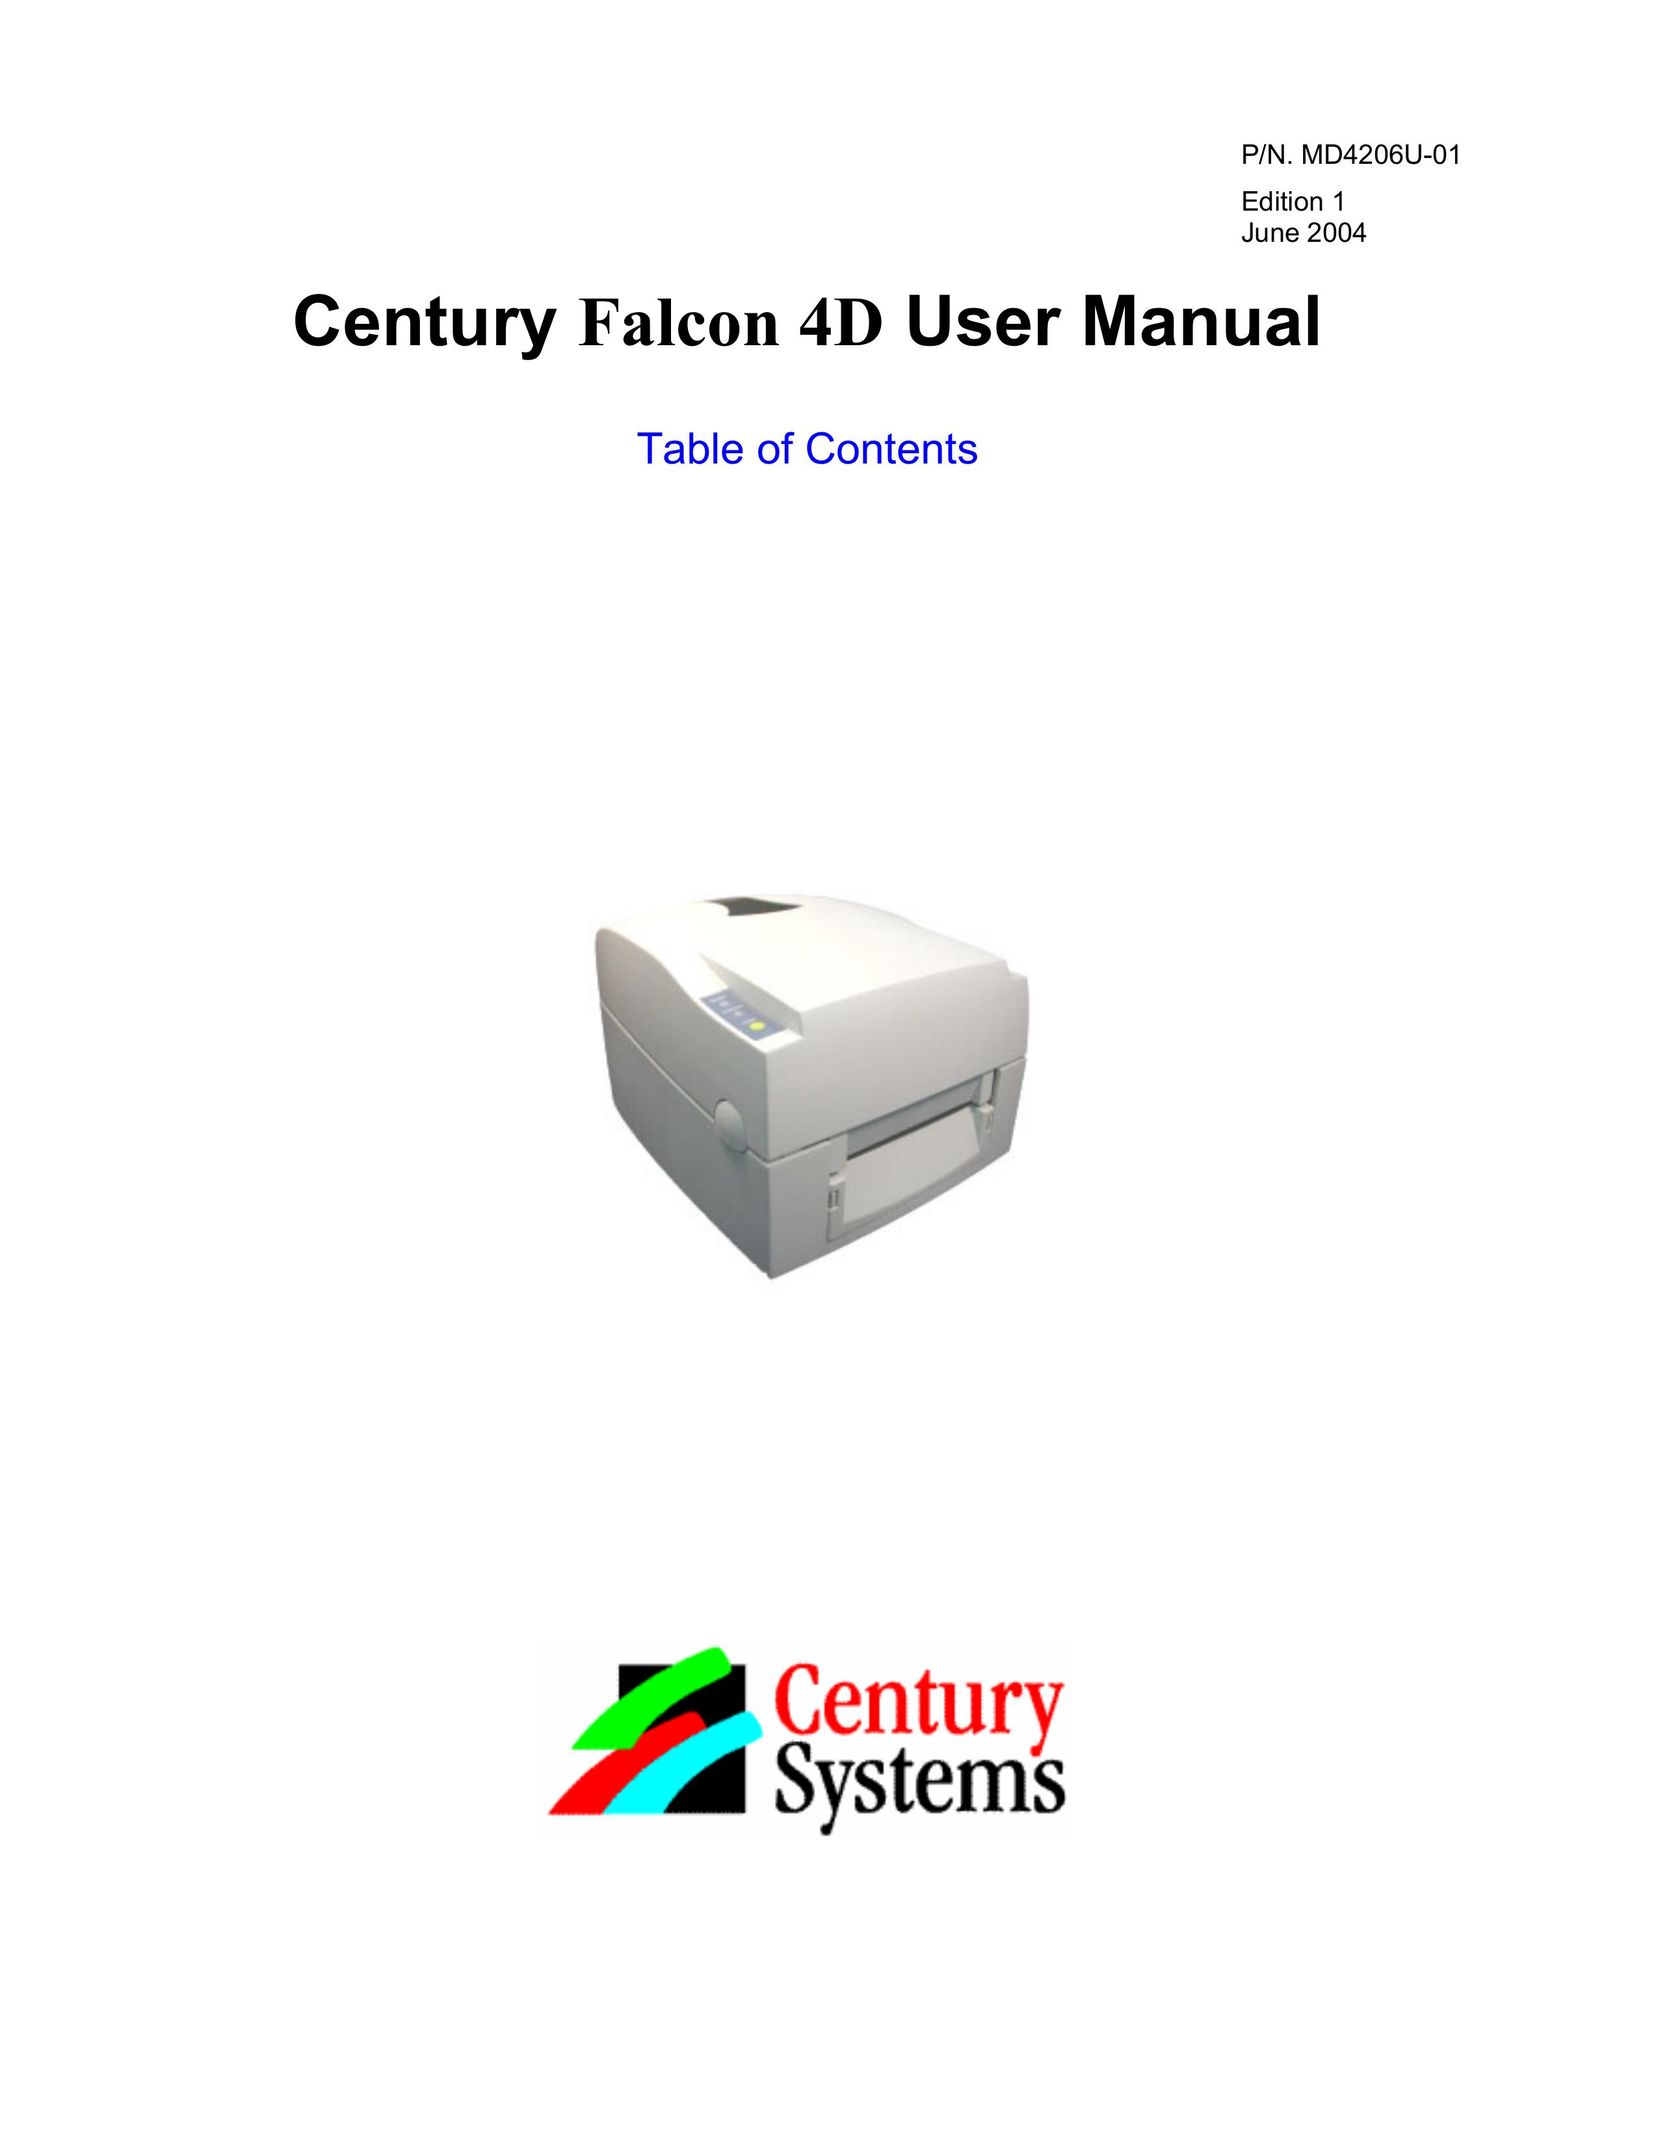 BUSlink FALCON 4D Printer User Manual